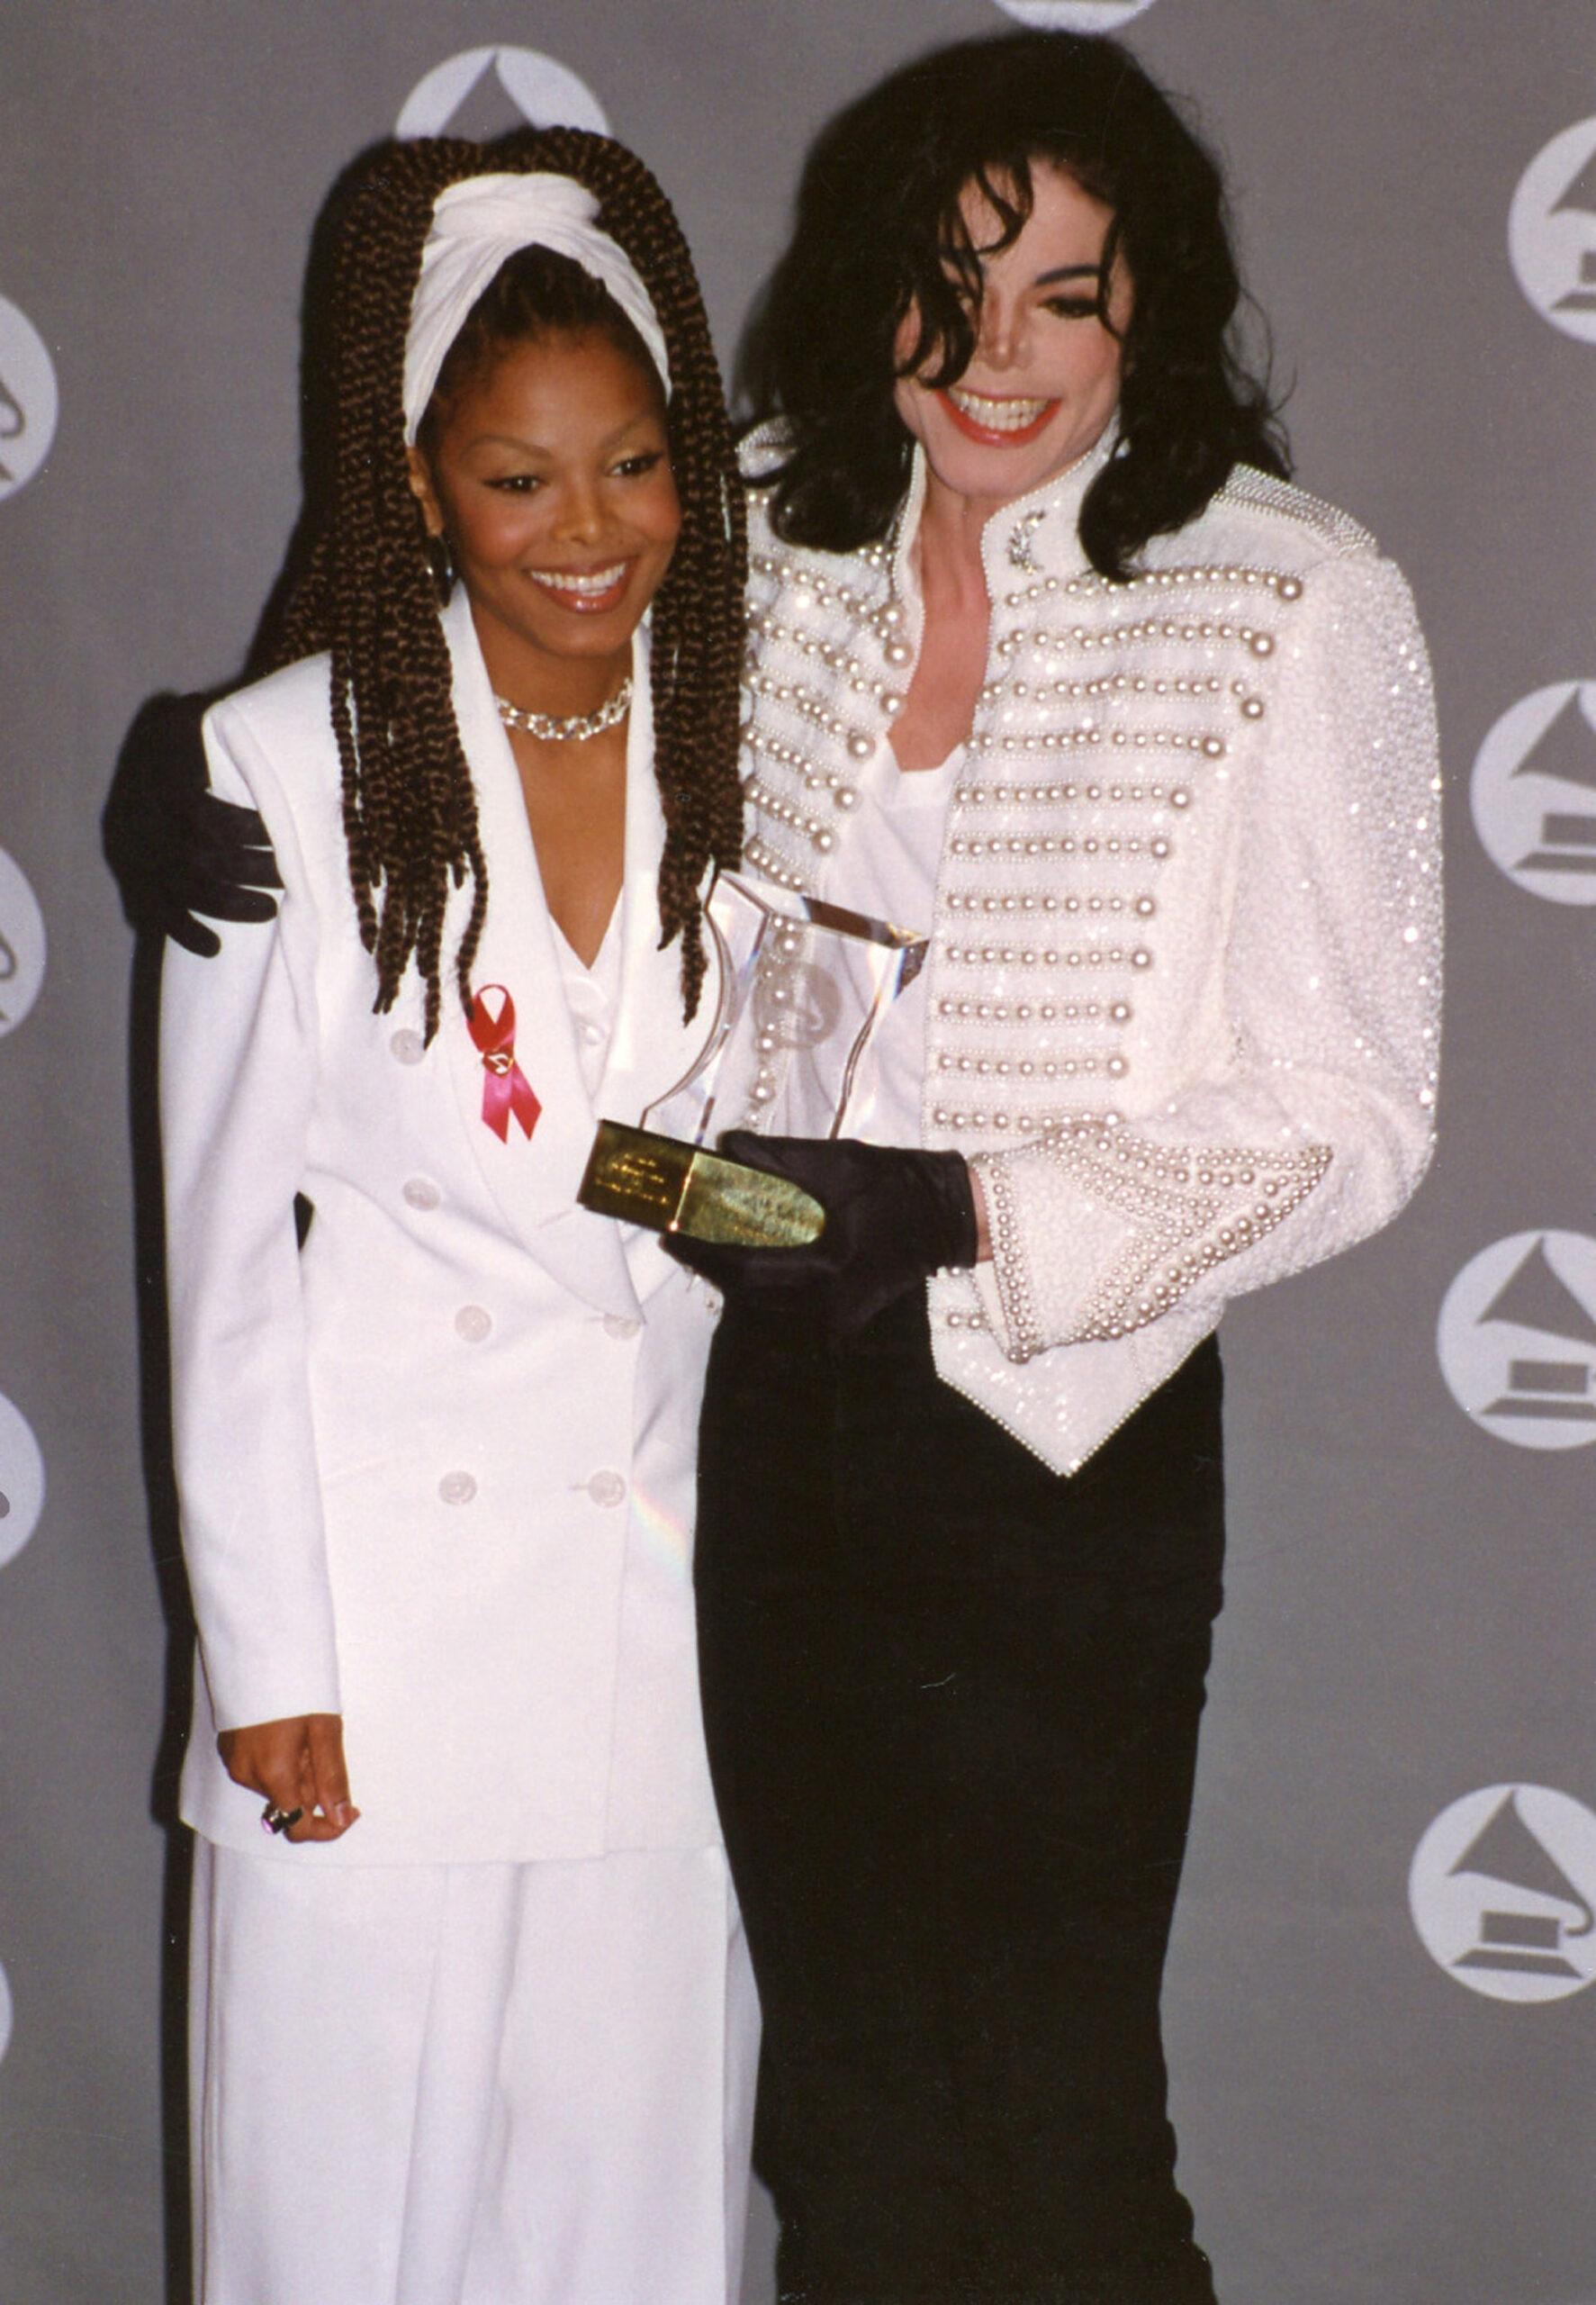 Janet Jackson SLAMS Brother Michael Jackson: He Used To Call Me Fat!